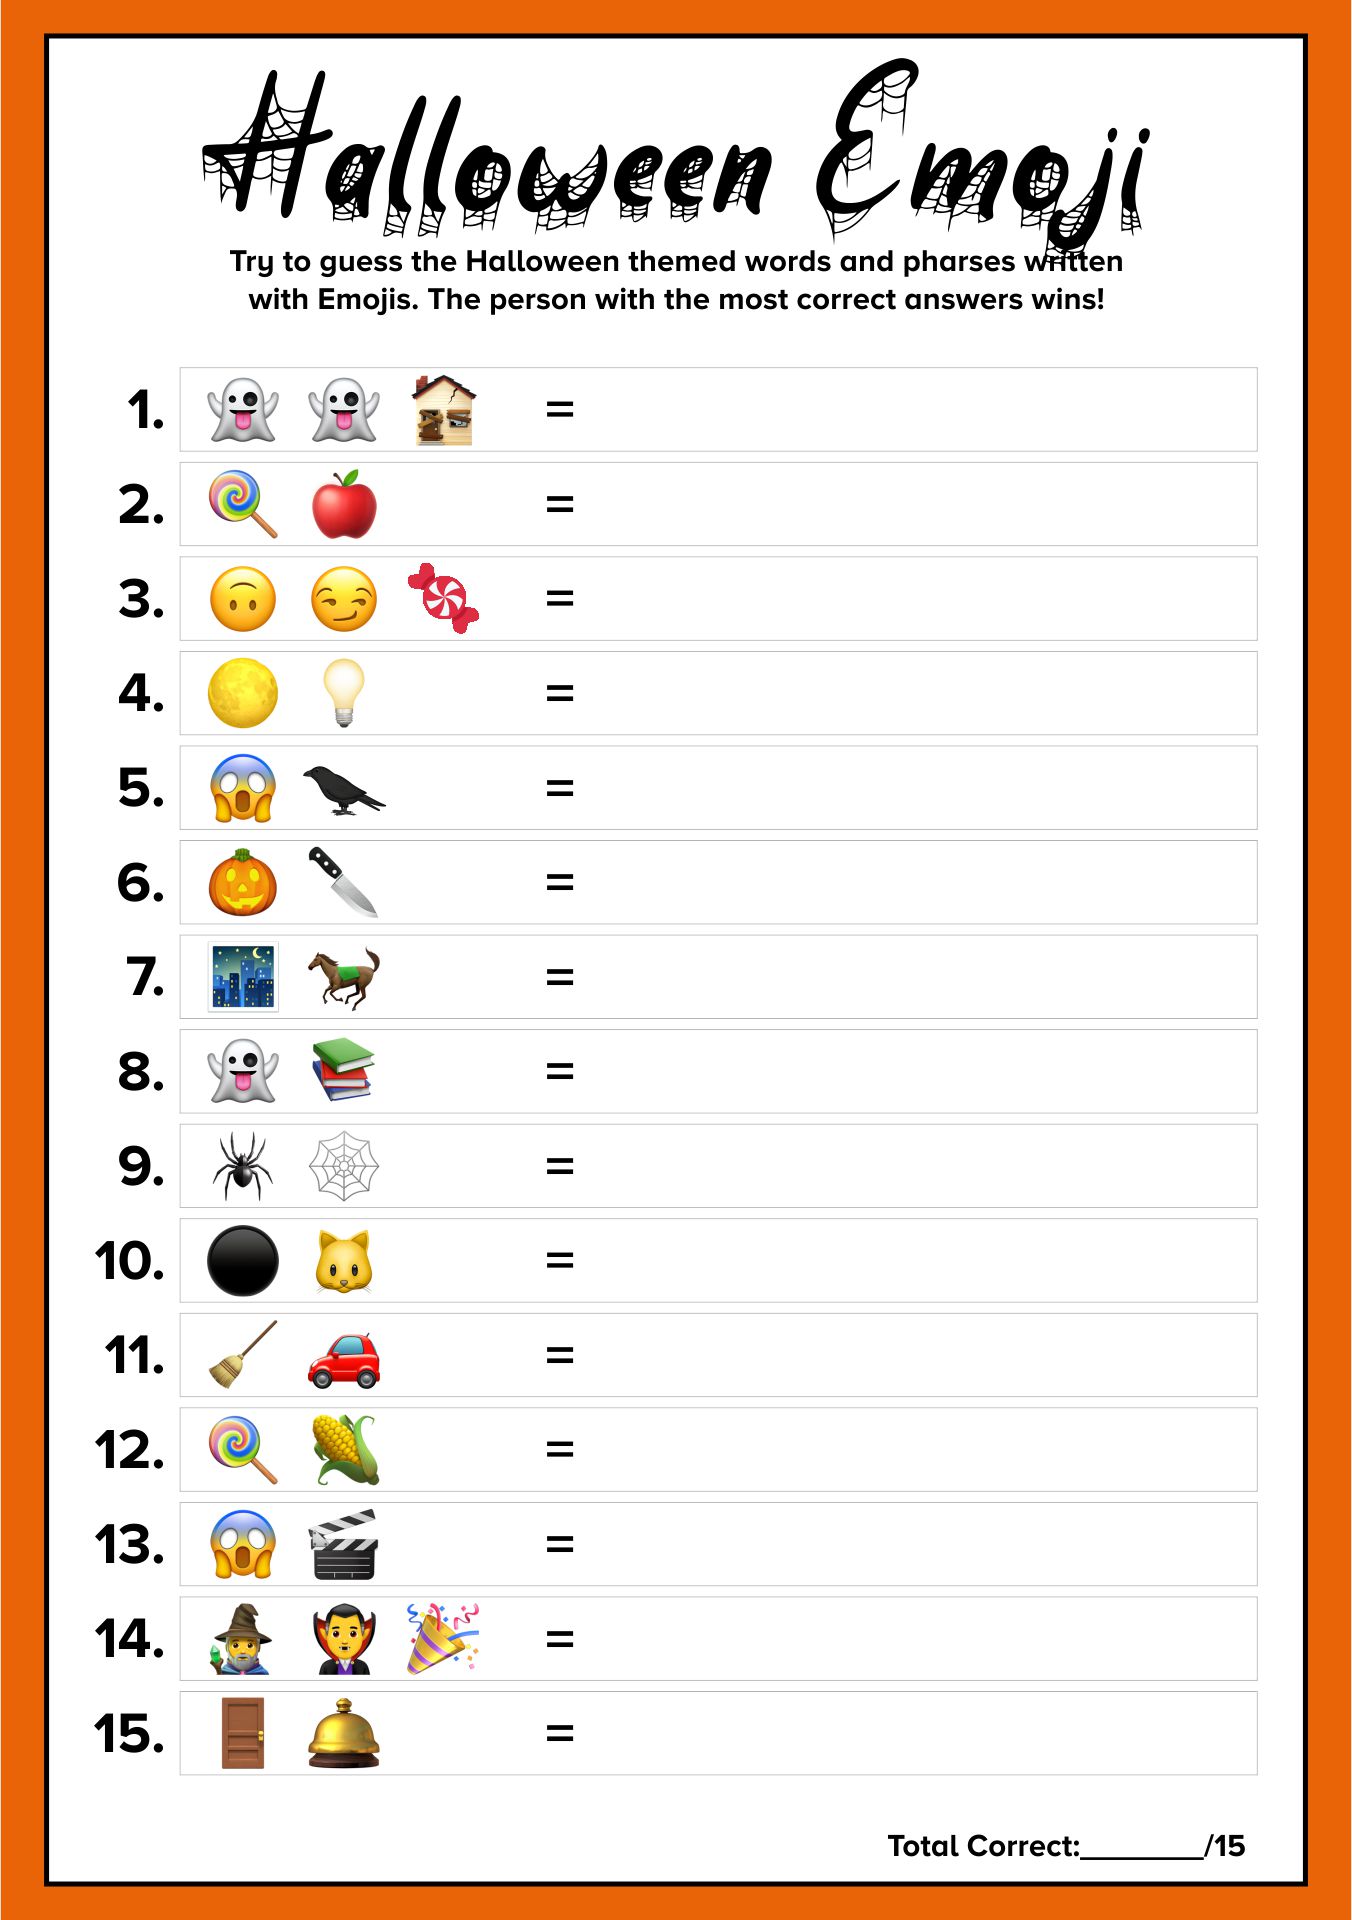 Halloween Party Emoji Guessing Game Printable